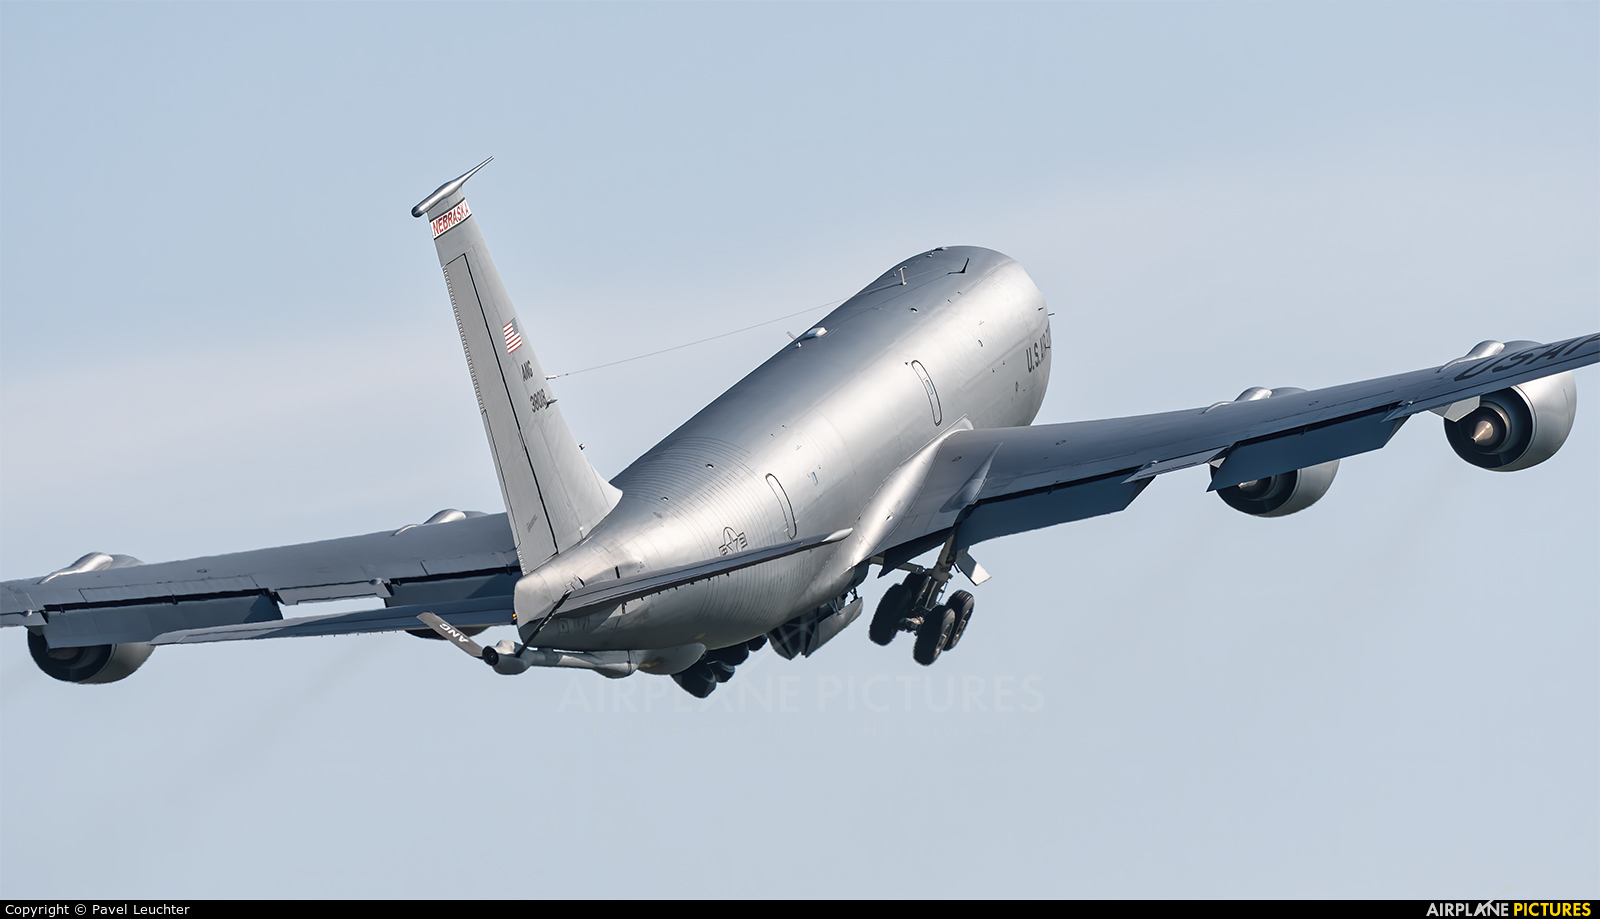 USA - Air Force 63-8018 aircraft at Pardubice